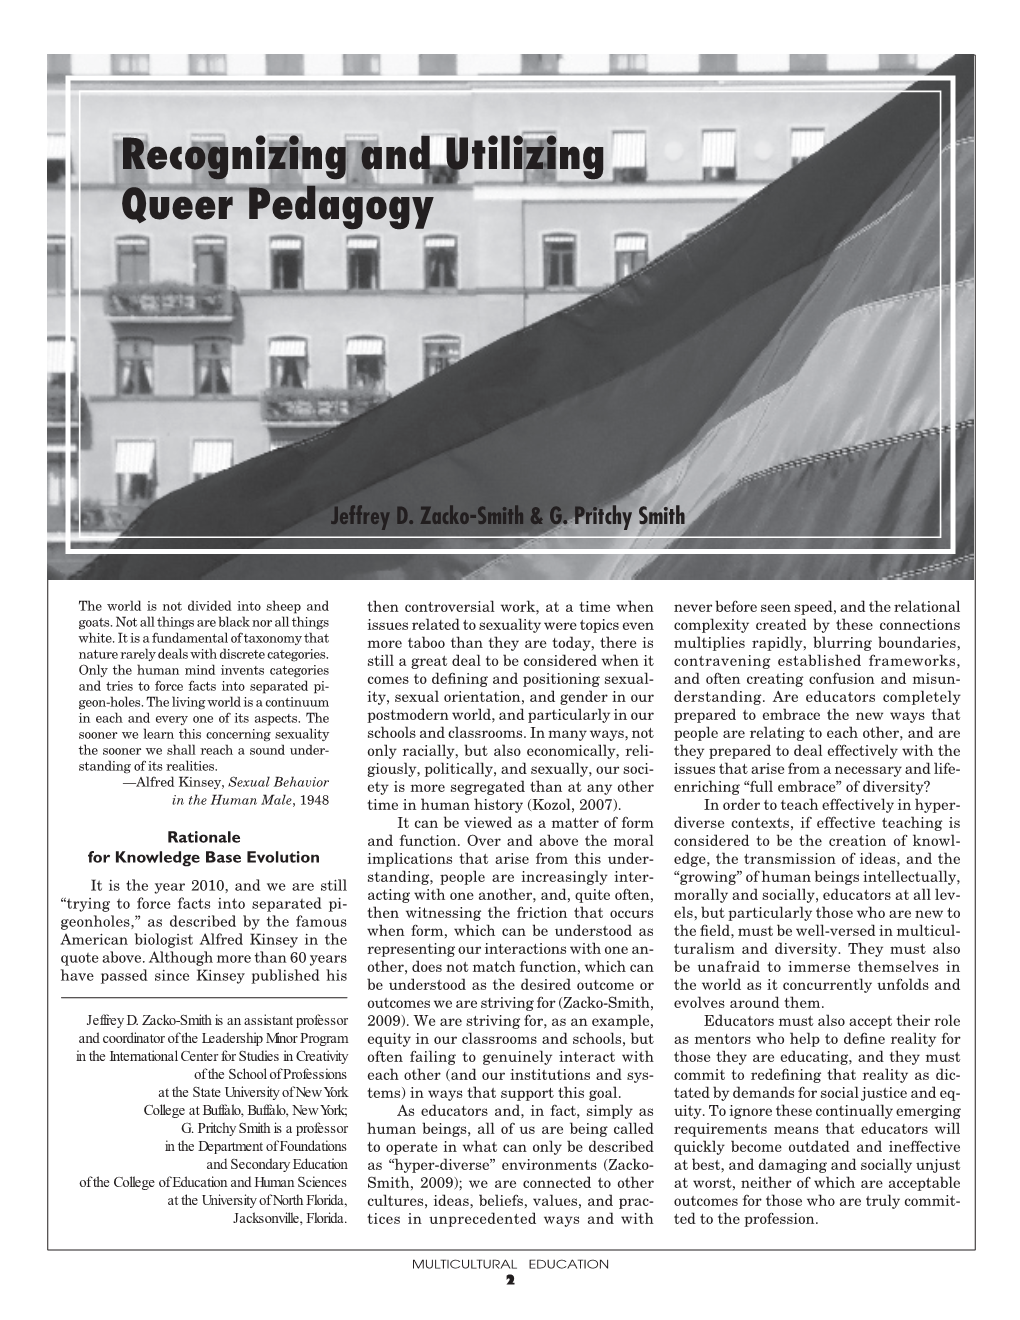 Recognizing and Utilizing Queer Pedagogy